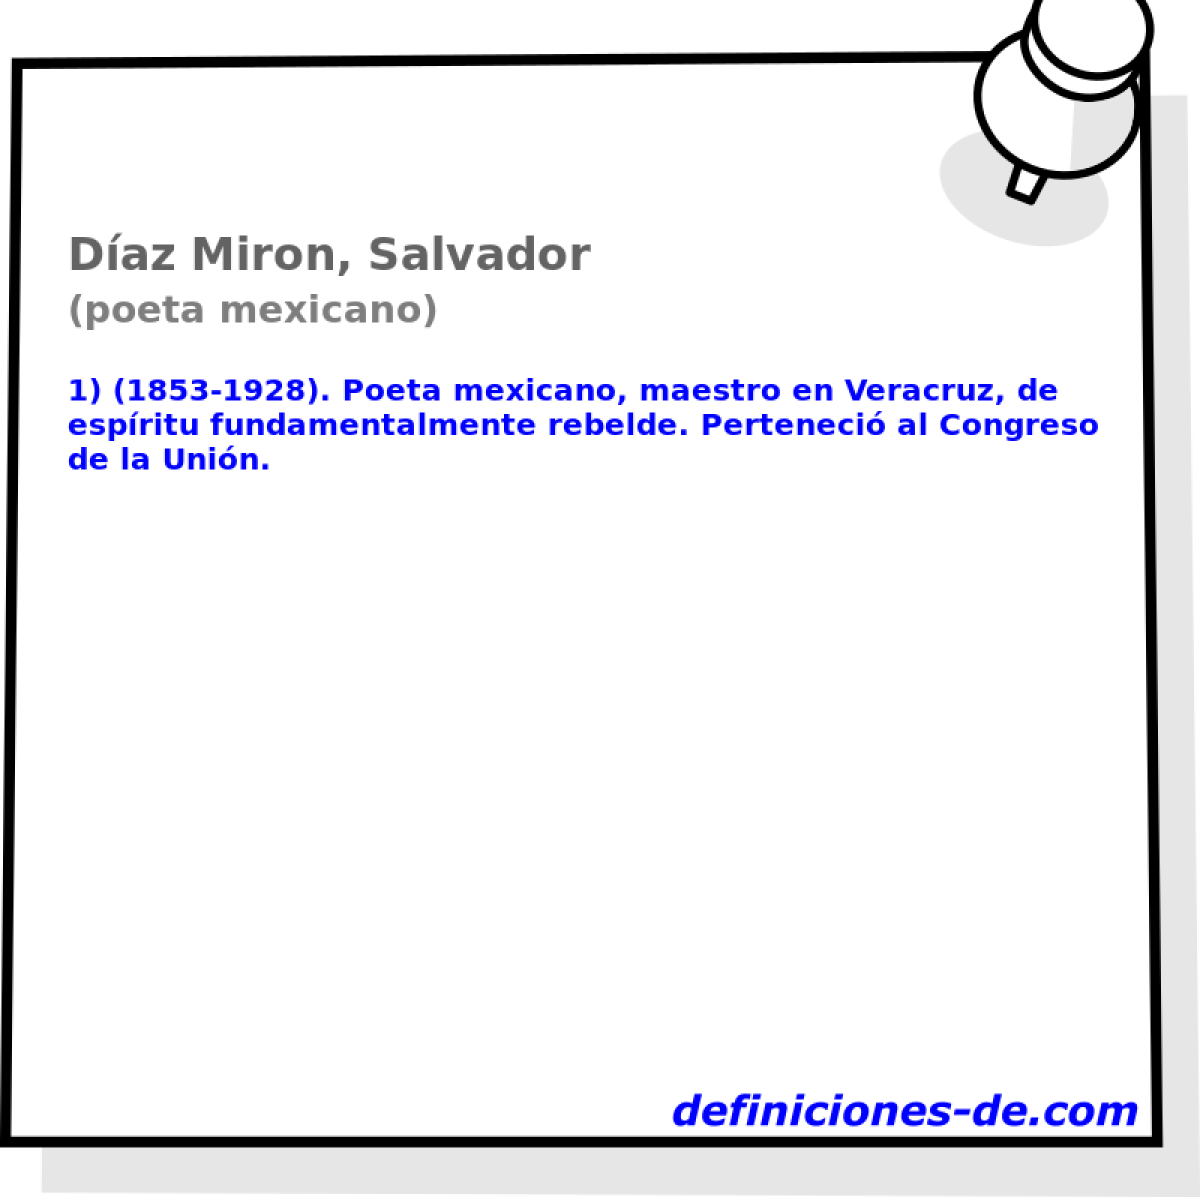 Daz Miron, Salvador (poeta mexicano)